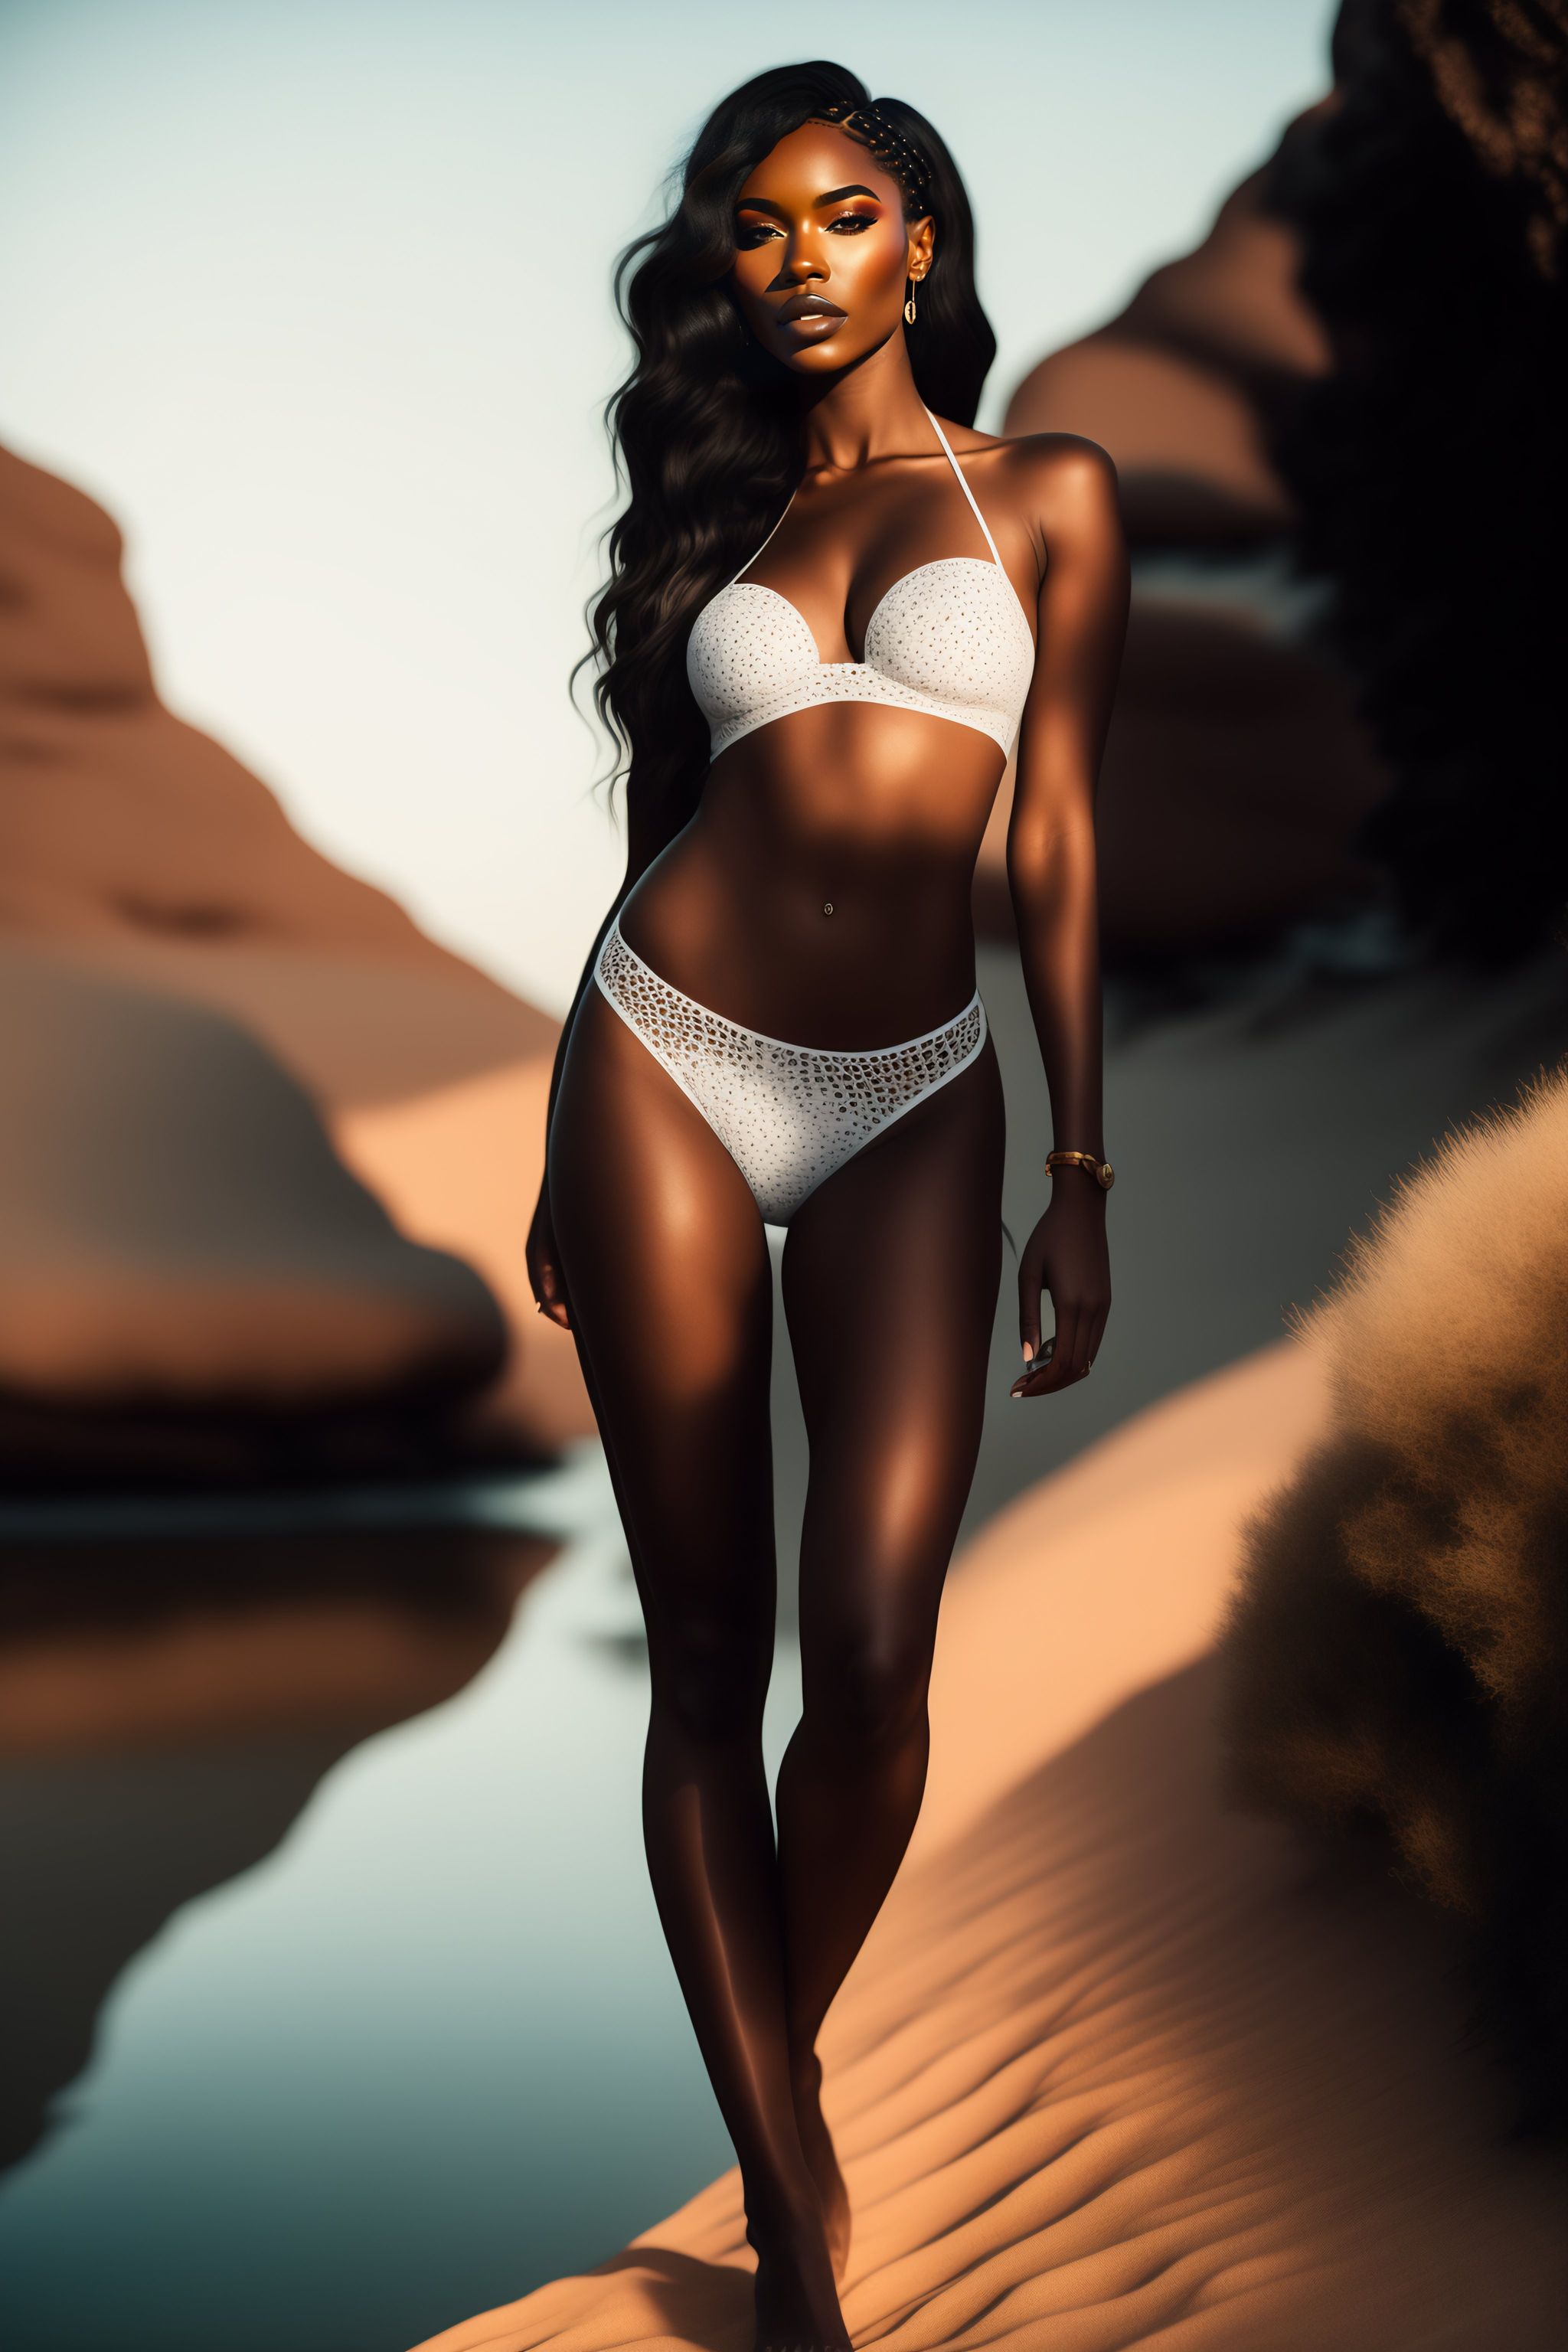 Lexica - Black woman, white spots on the skin, in a lace bikini